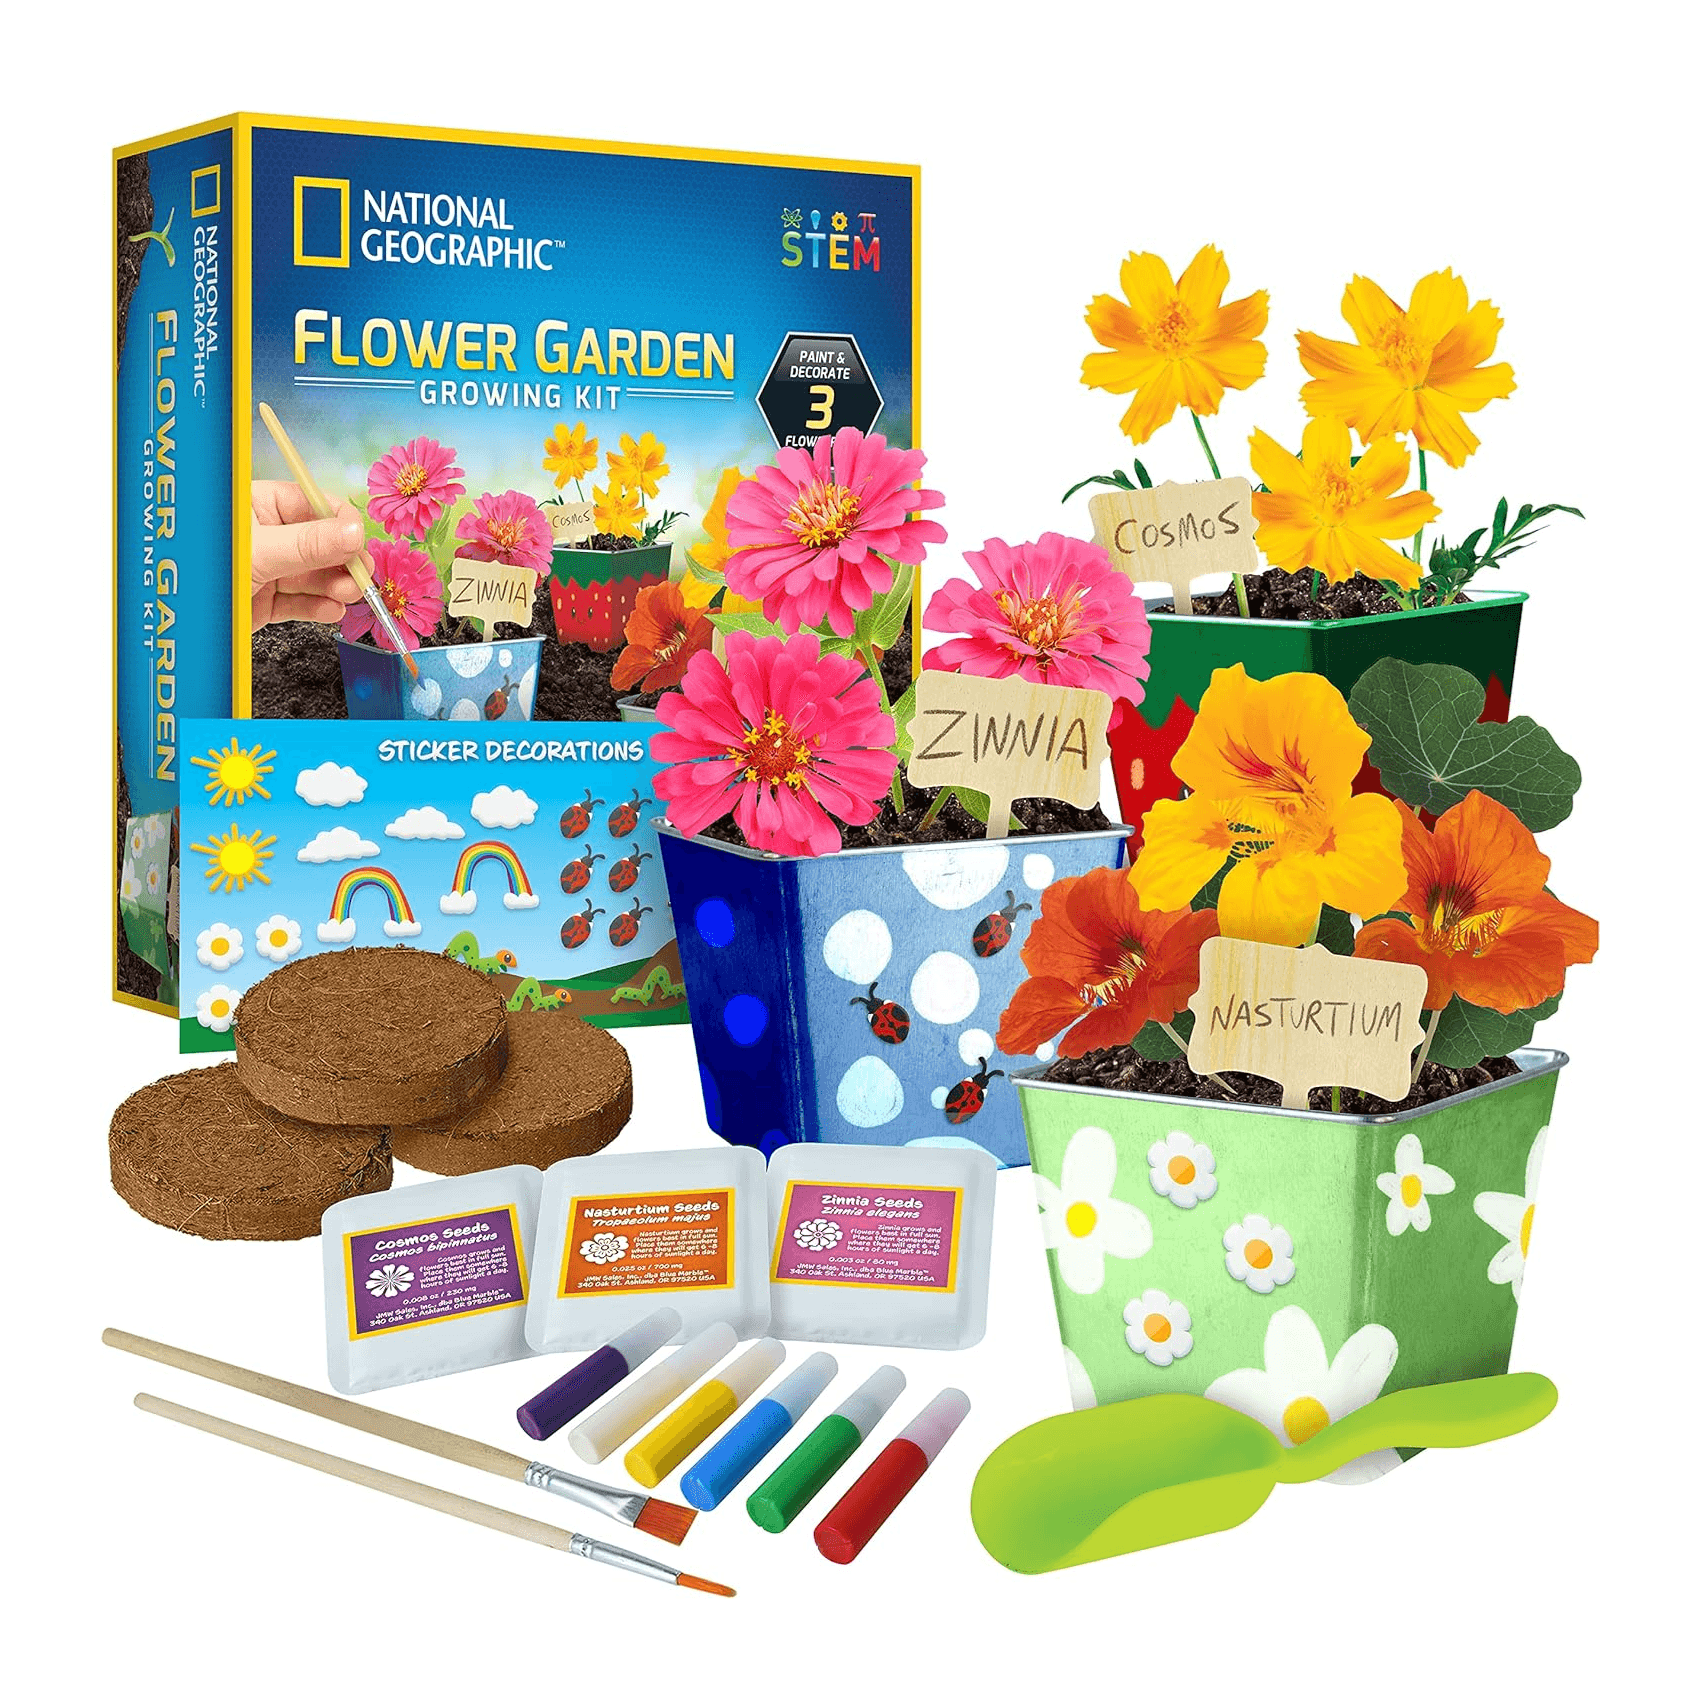 Montessori NATIONAL GEOGRAPHIC Flower Garden Growing Kit